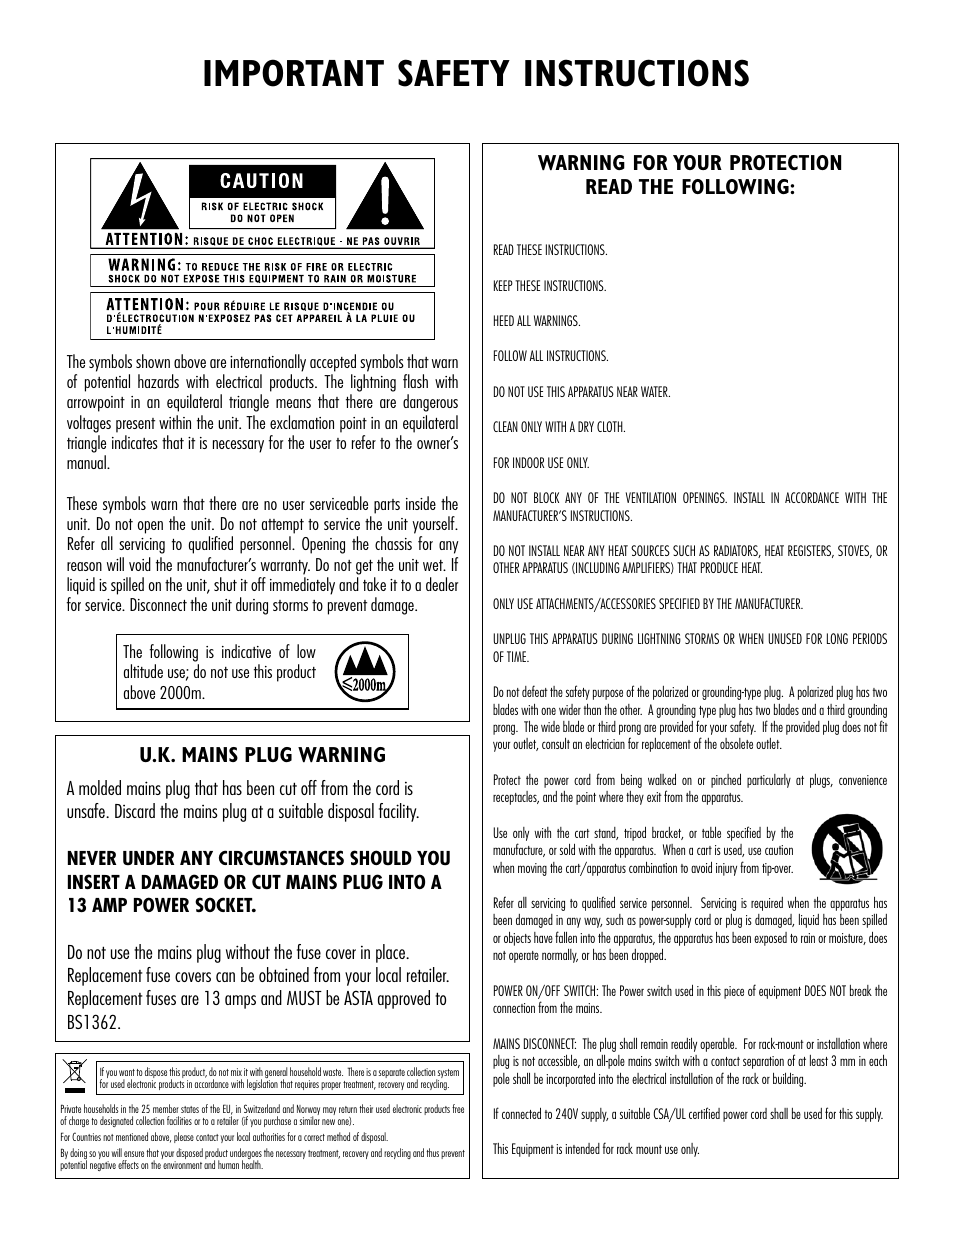 Important safety instructions, U.k. mains plug warning, Warning for